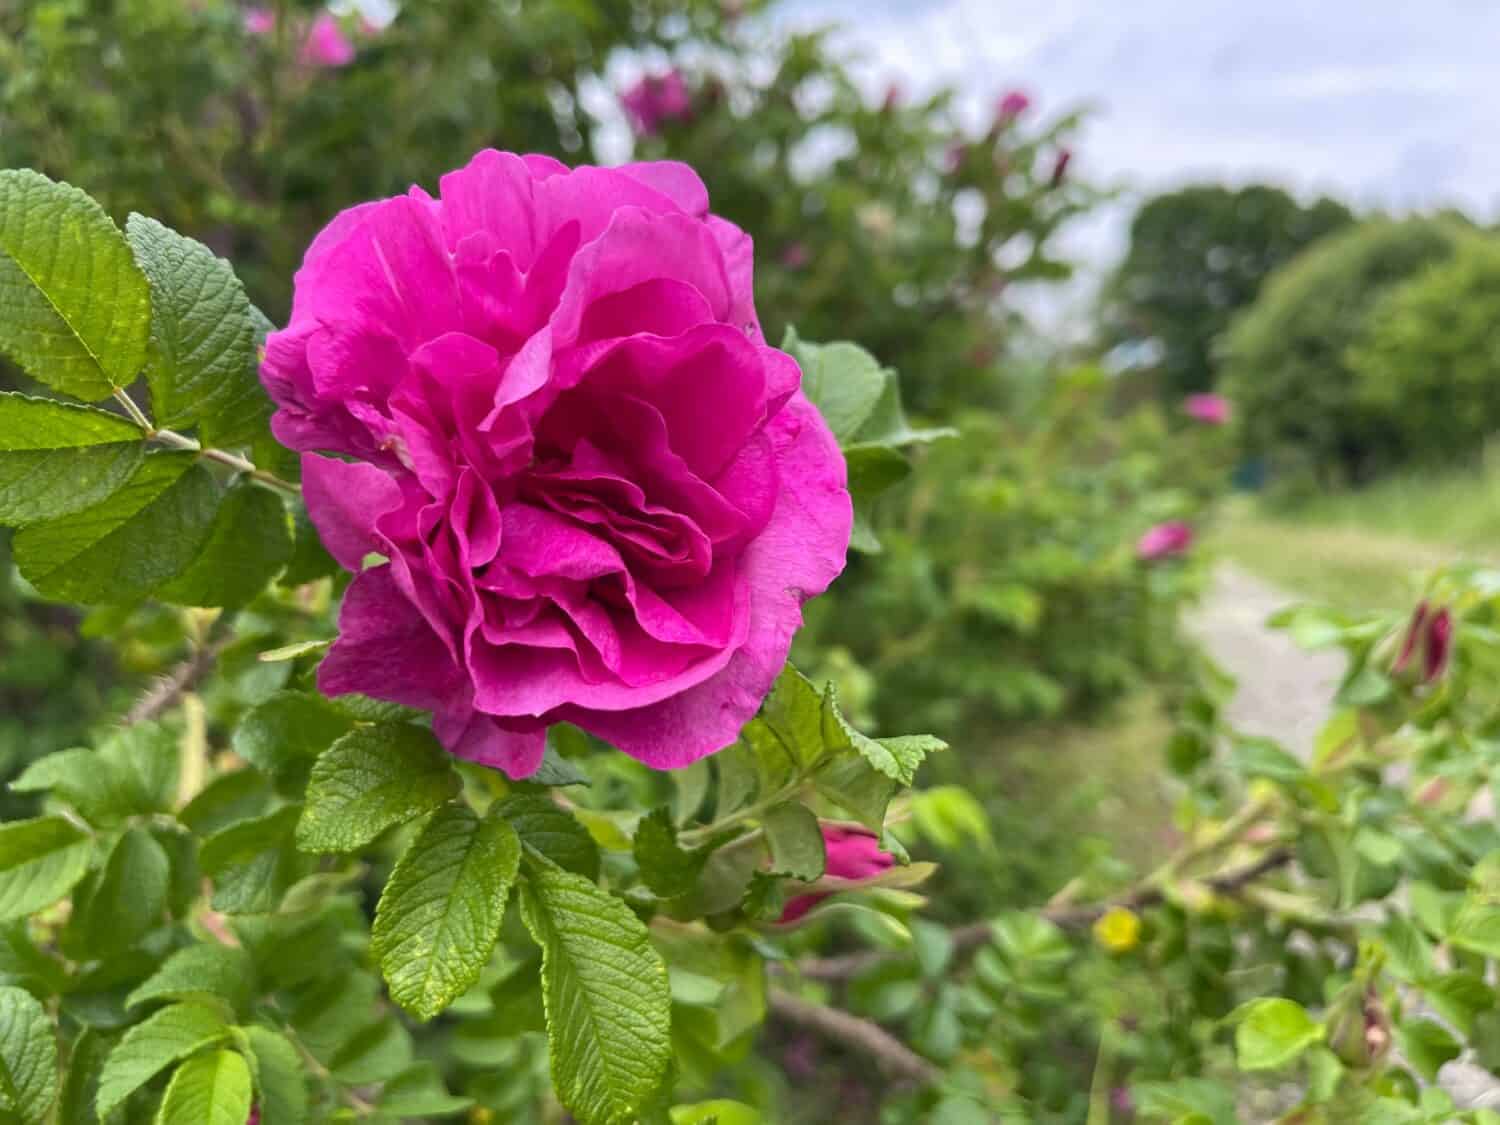 Rugosa rose (Rosa rugosa) flower blooming outdoors.